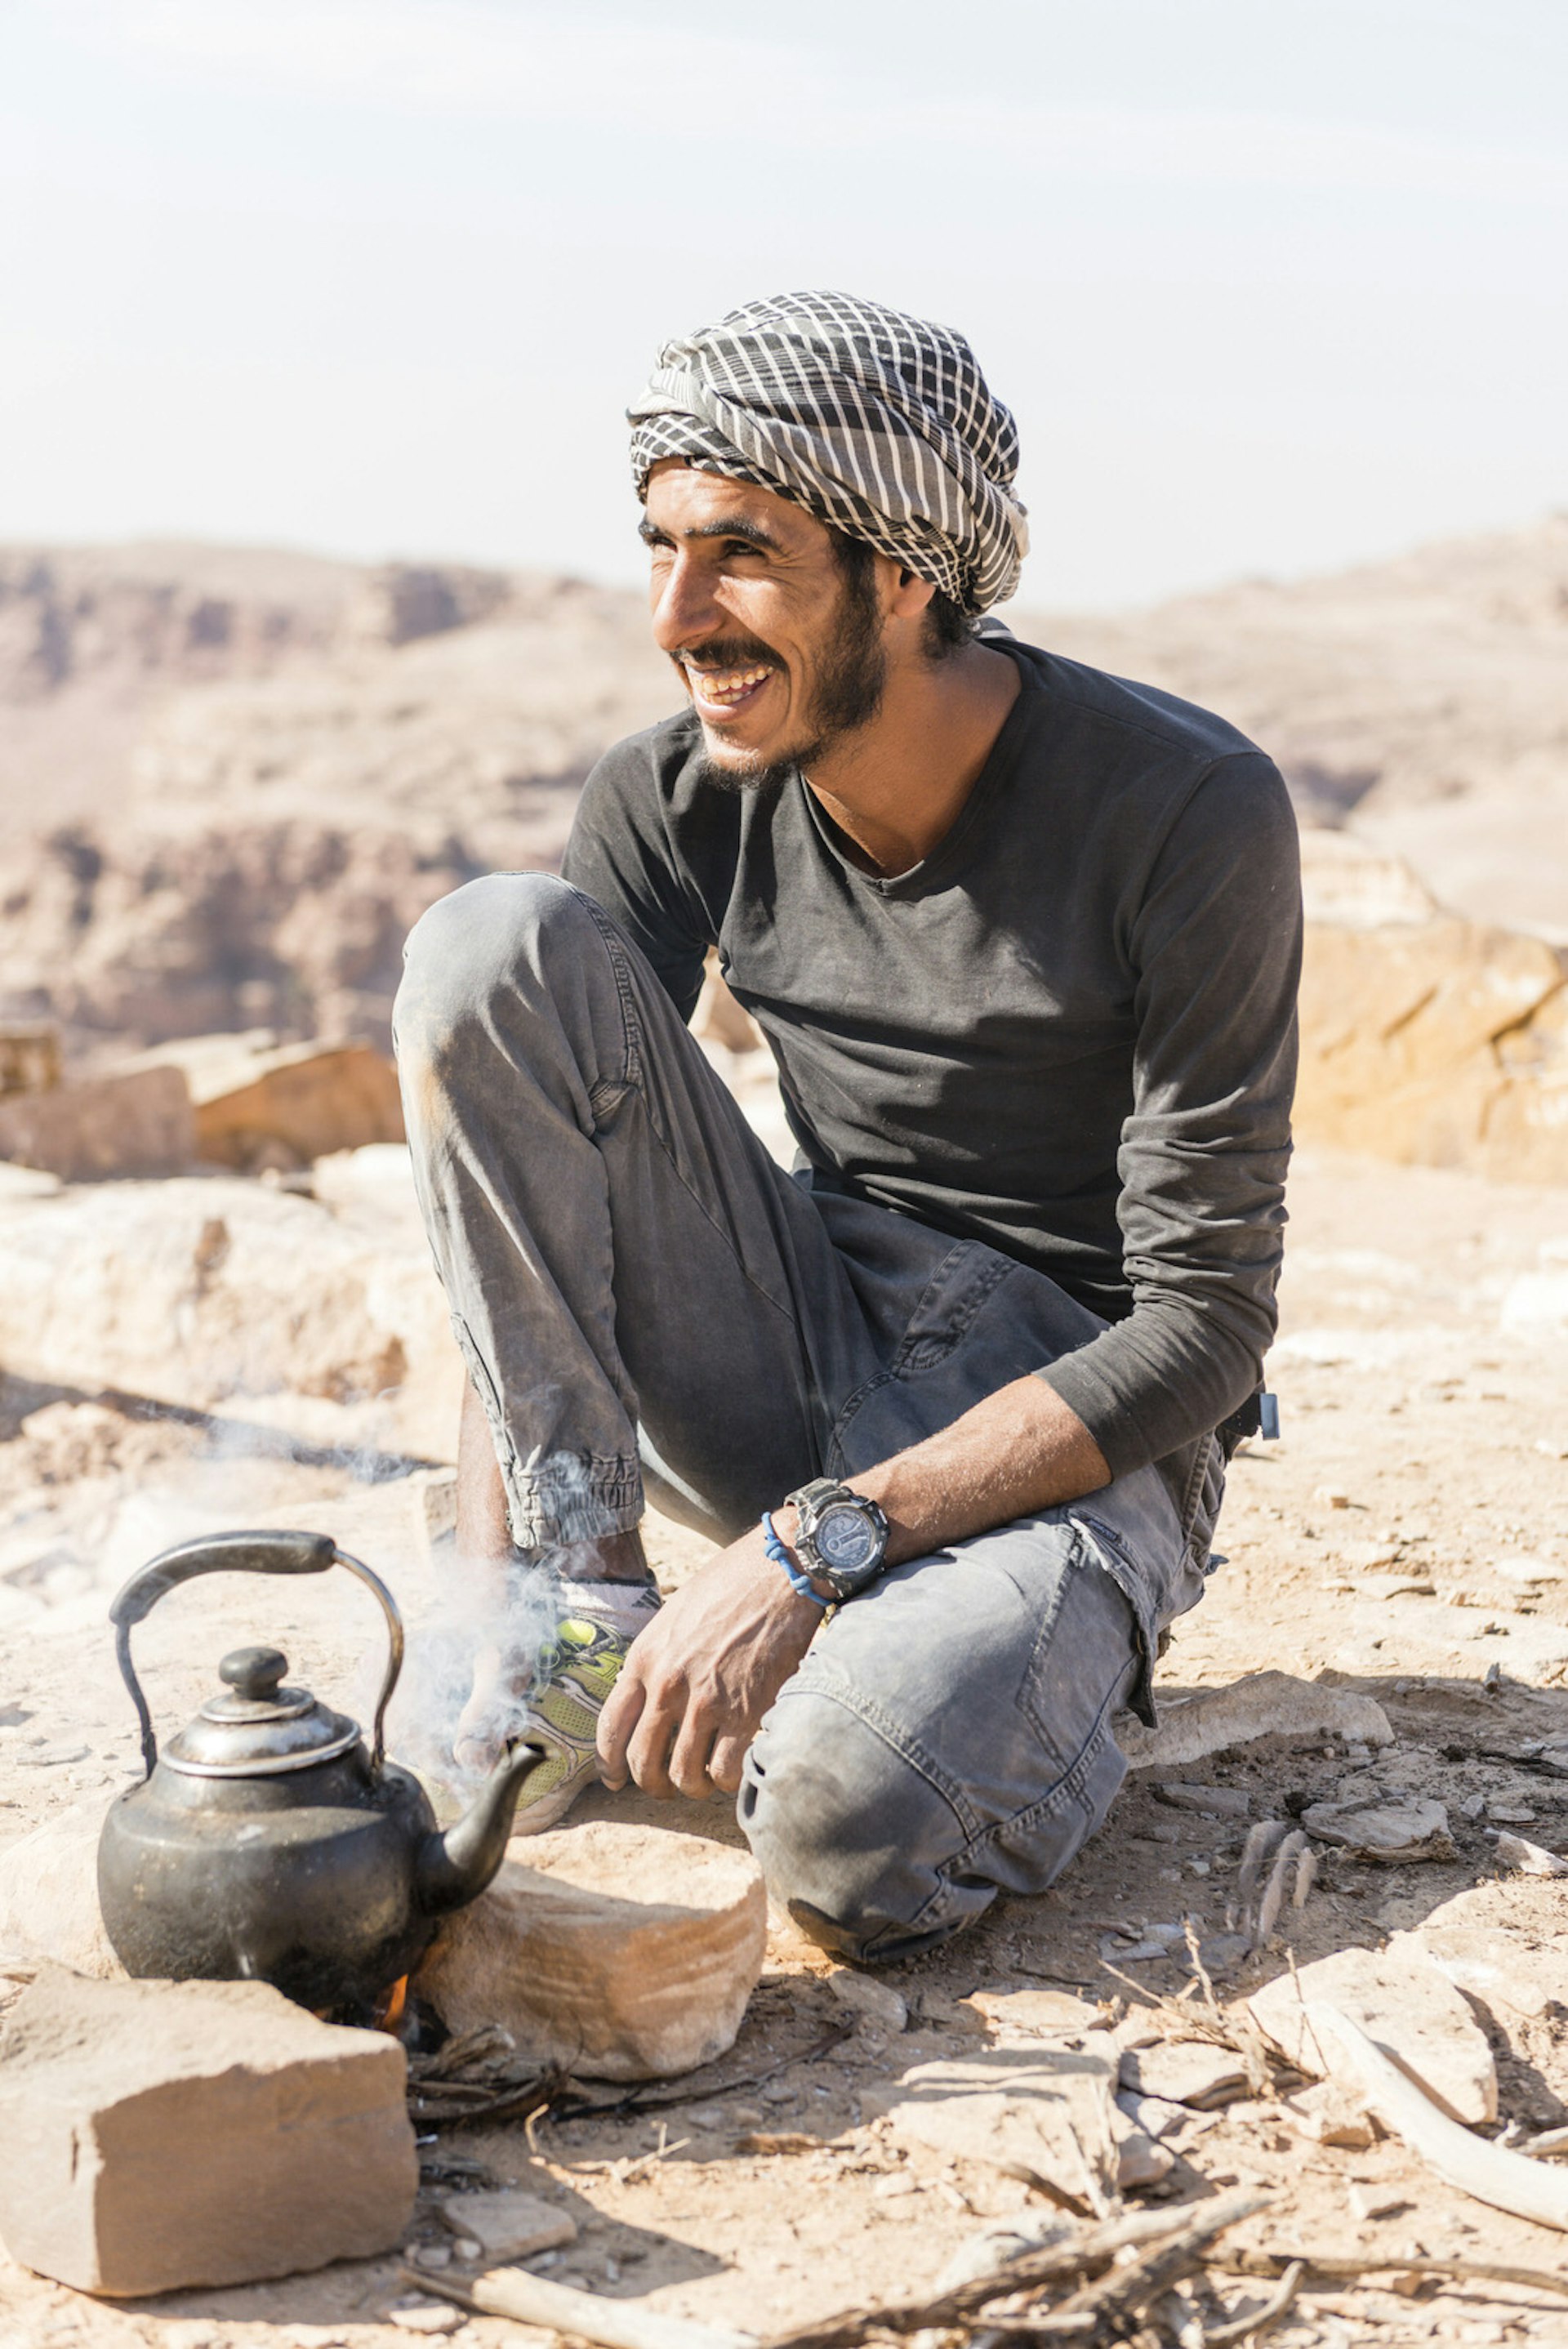 Mohammed Al Homran boiling a kettle for tea on the Jordan Trail